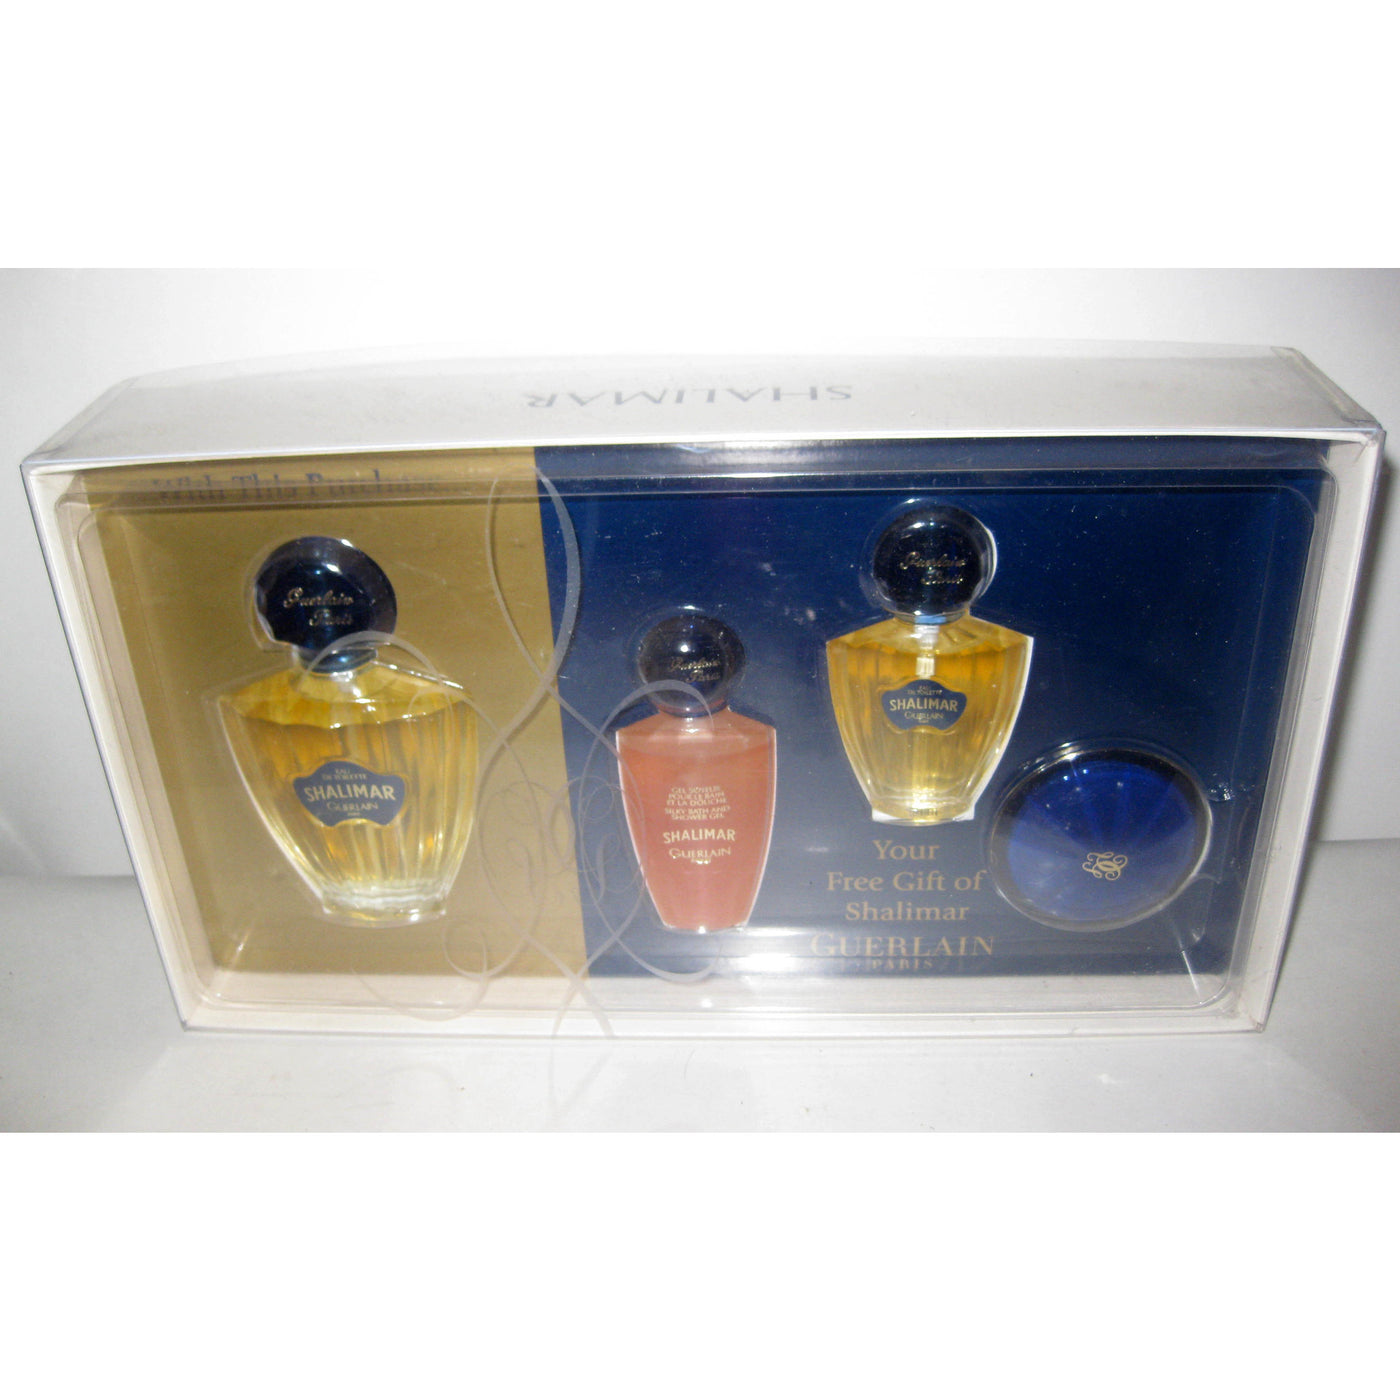 Shalimar Fragrance Gift Set by Guerlain